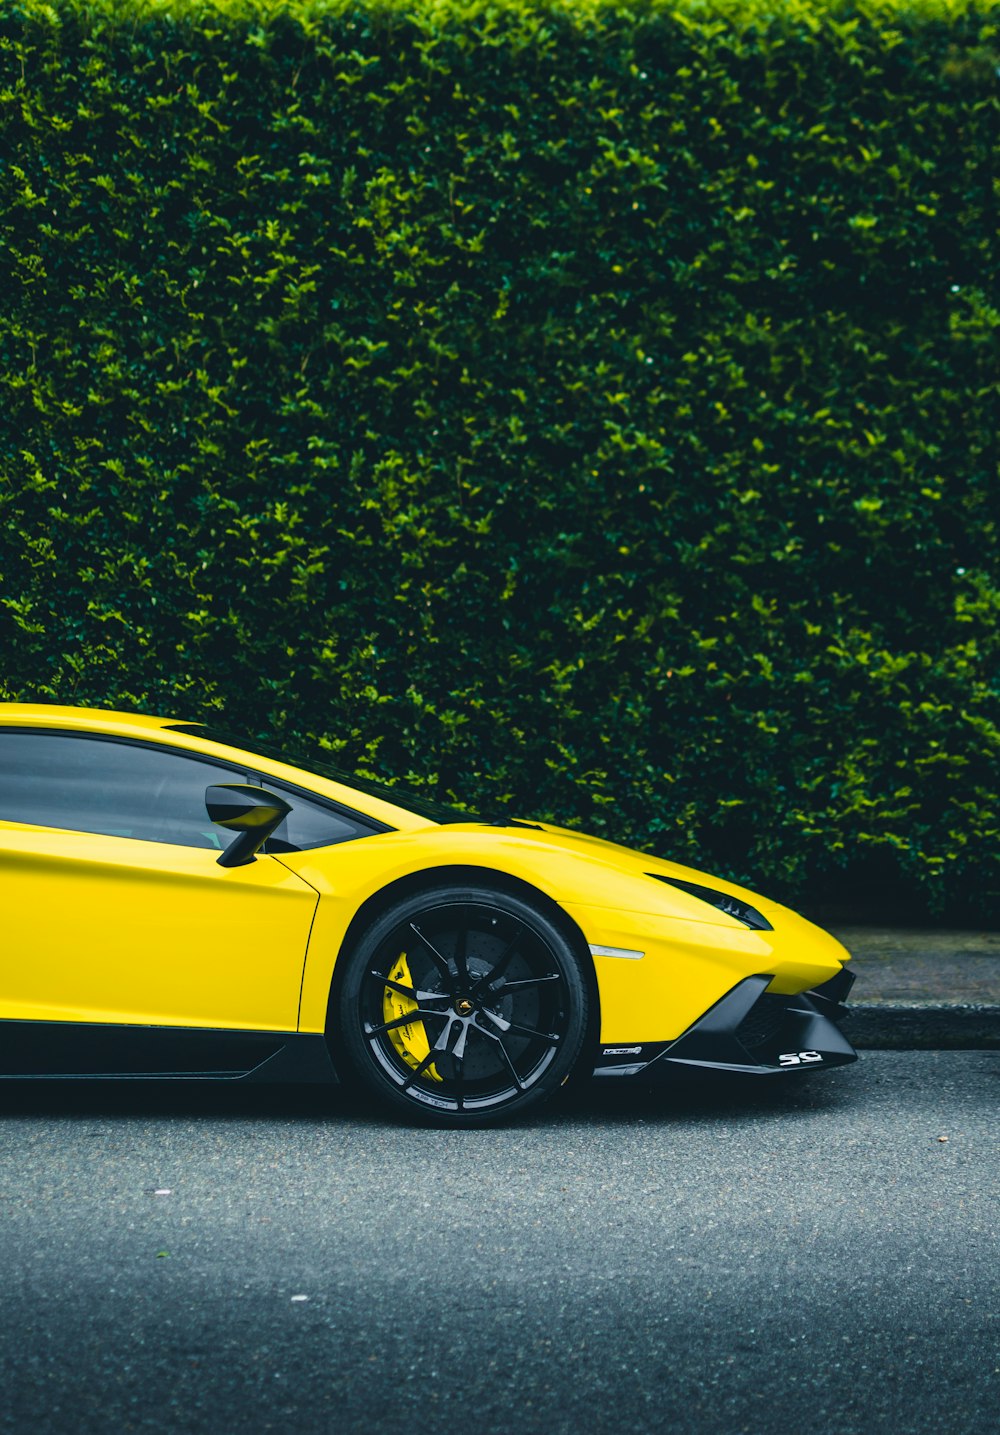 Lamborghini coupé amarillo aparcado junto a un arbusto